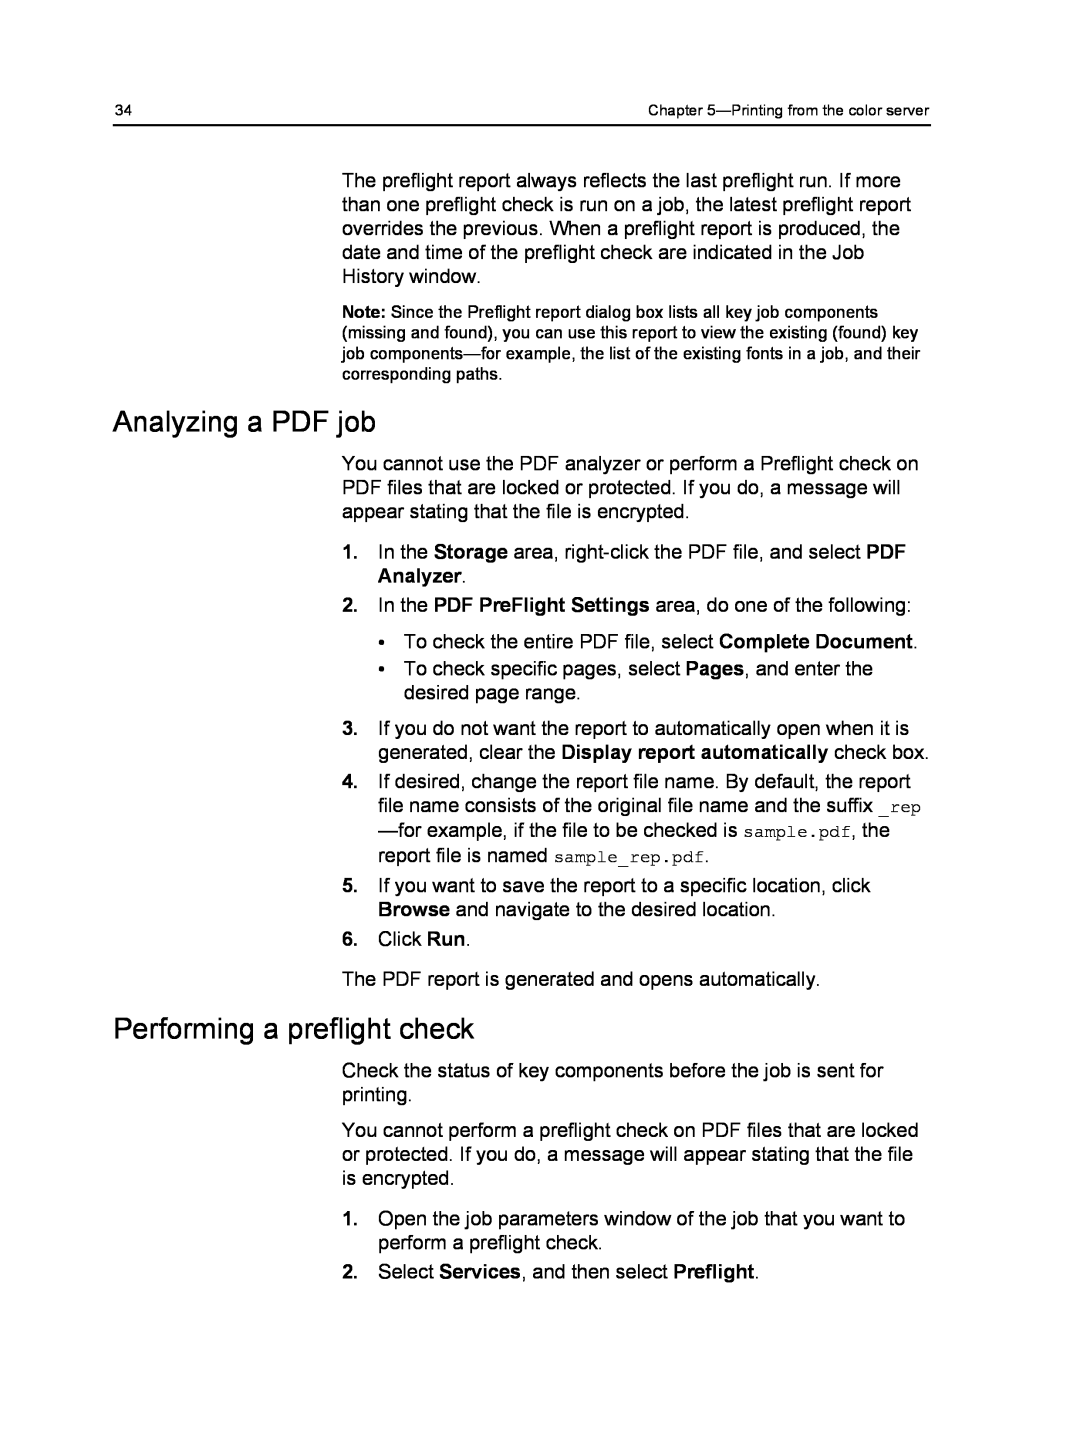 Xerox 560, 550 manual Analyzing a PDF job, Performing a preflight check 